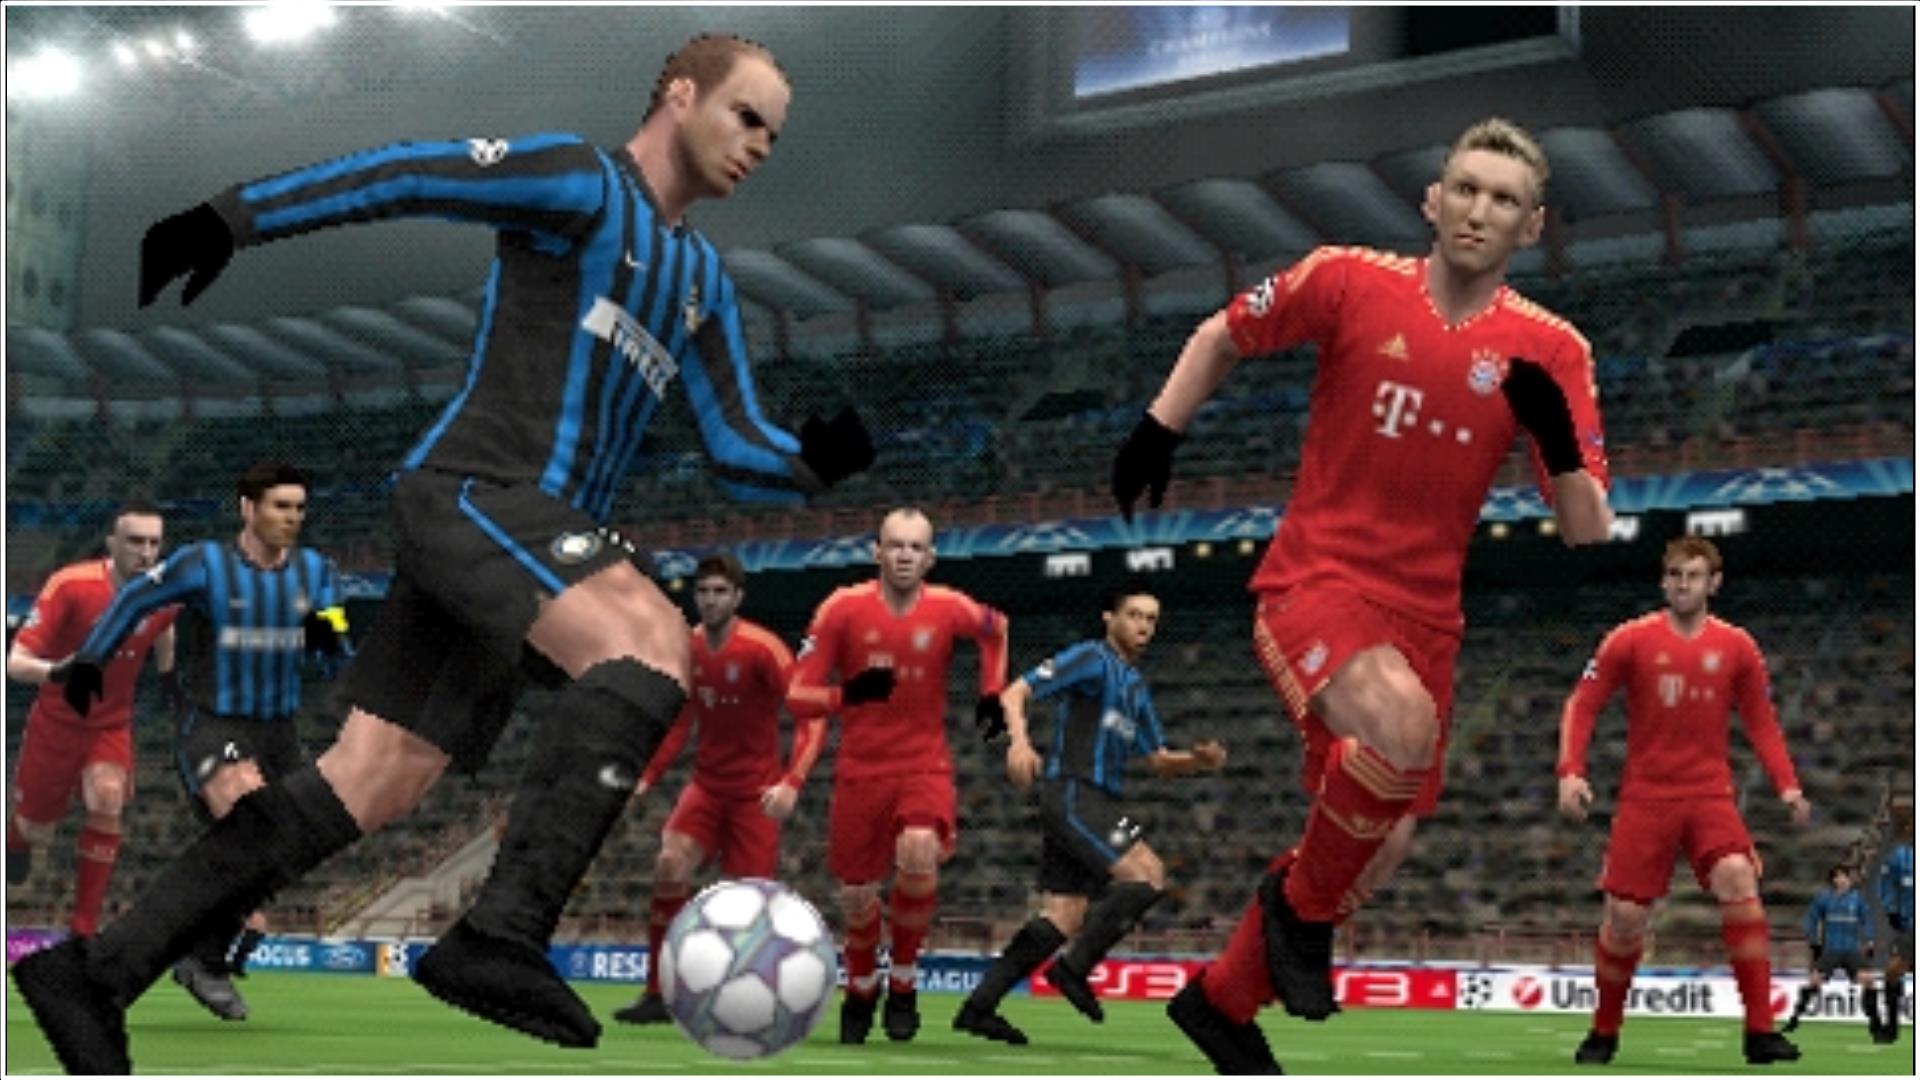 Pro Evolution Soccer 2012 PSP ISO Download - SafeROMs